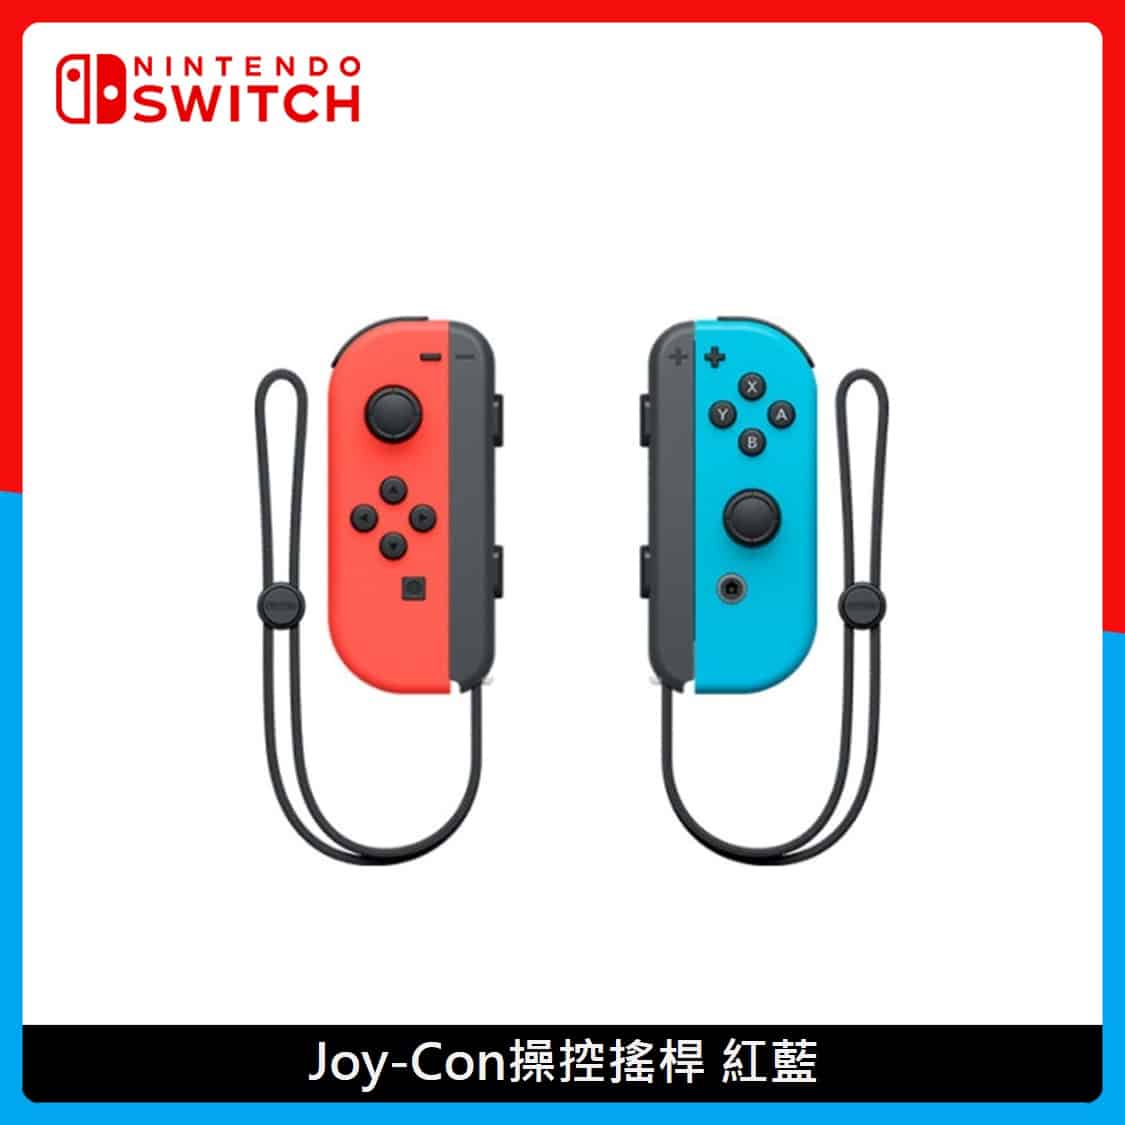 Nintendo 任天堂Switch OLED 紅藍主機Joy-Con搖桿組合(4色選